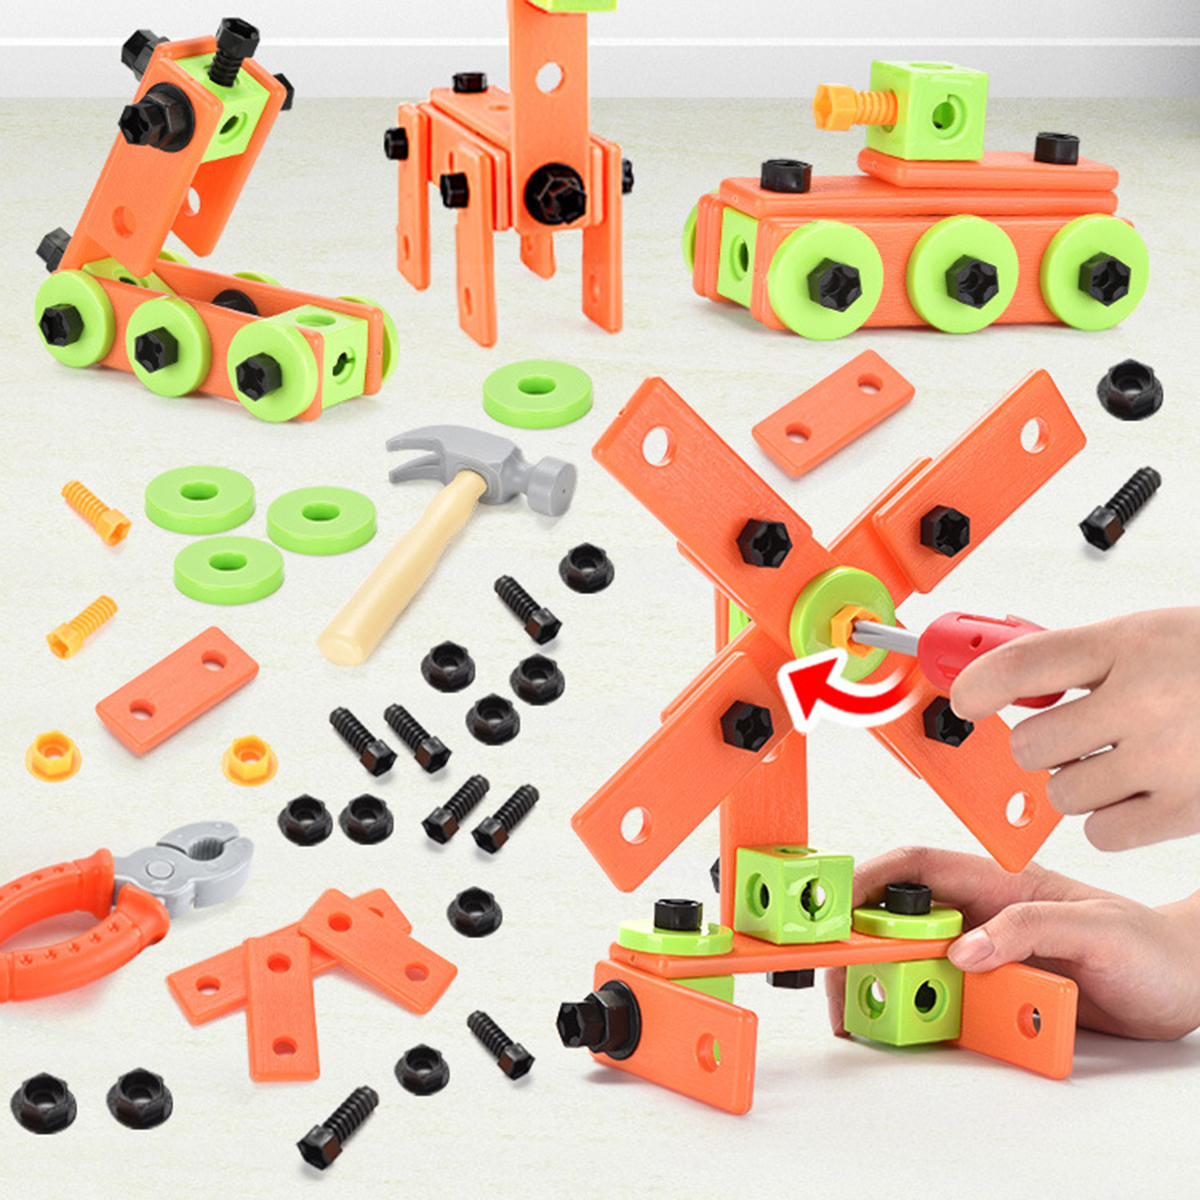 1372Pcs-3D-Puzzle-DIY-Asassembly-Screwing-Blocks-Repair-Tool-Kit-Educational-Toy-for-Kids-Gift-1735098-7